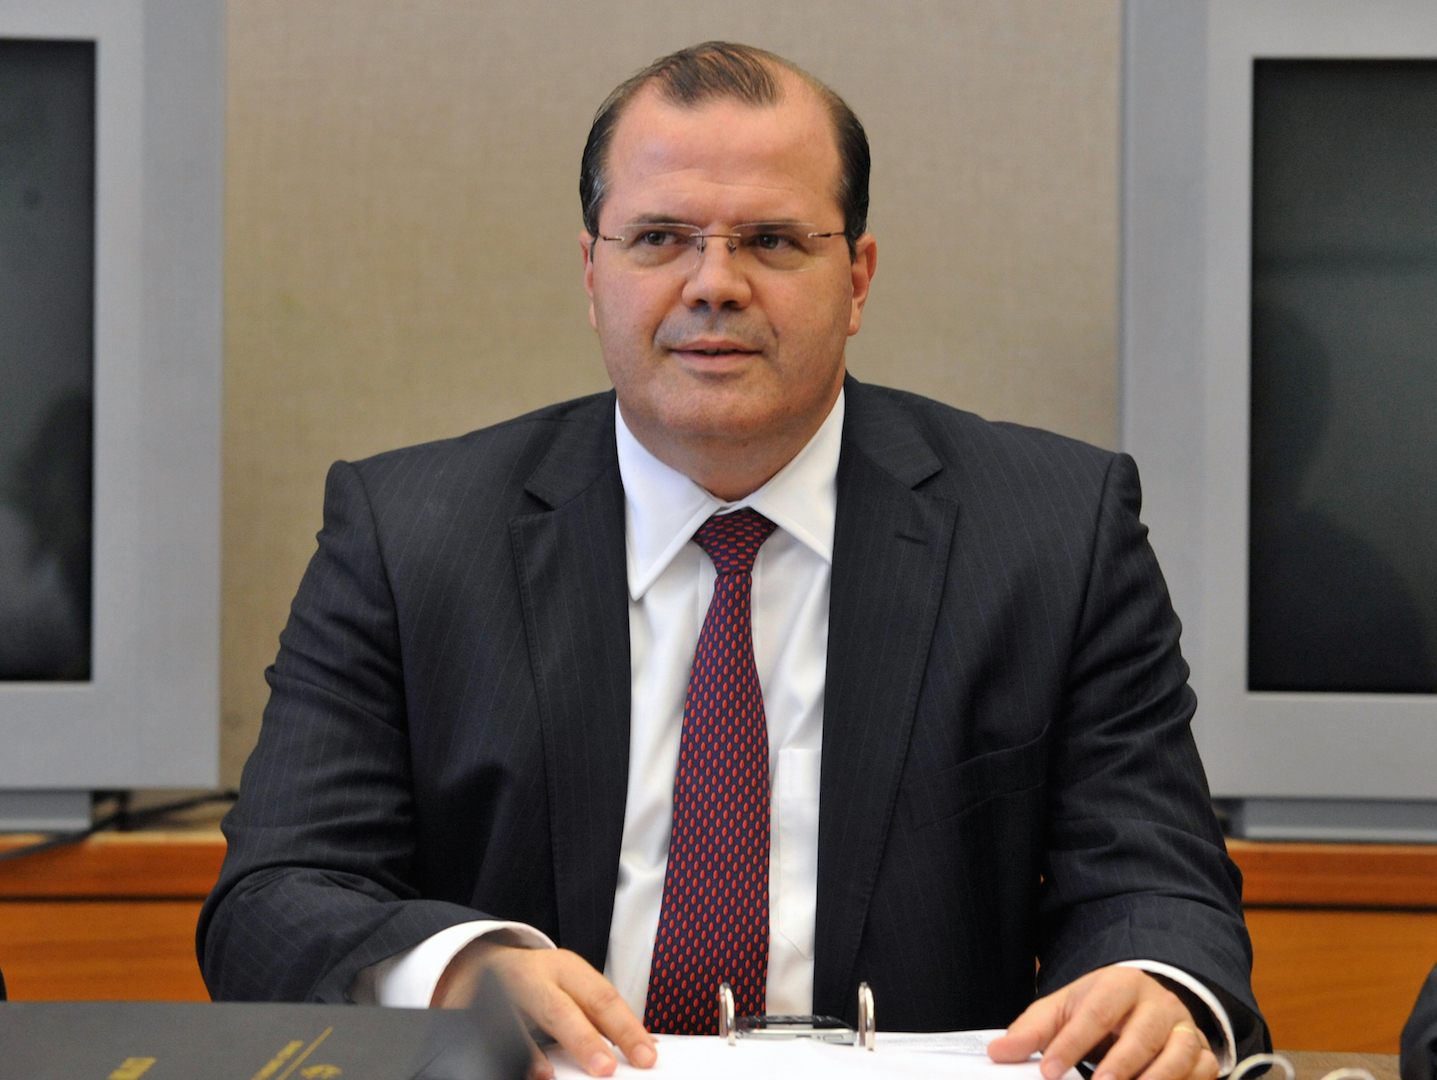 Brazil's Central Bank President, Alexandre Tombini